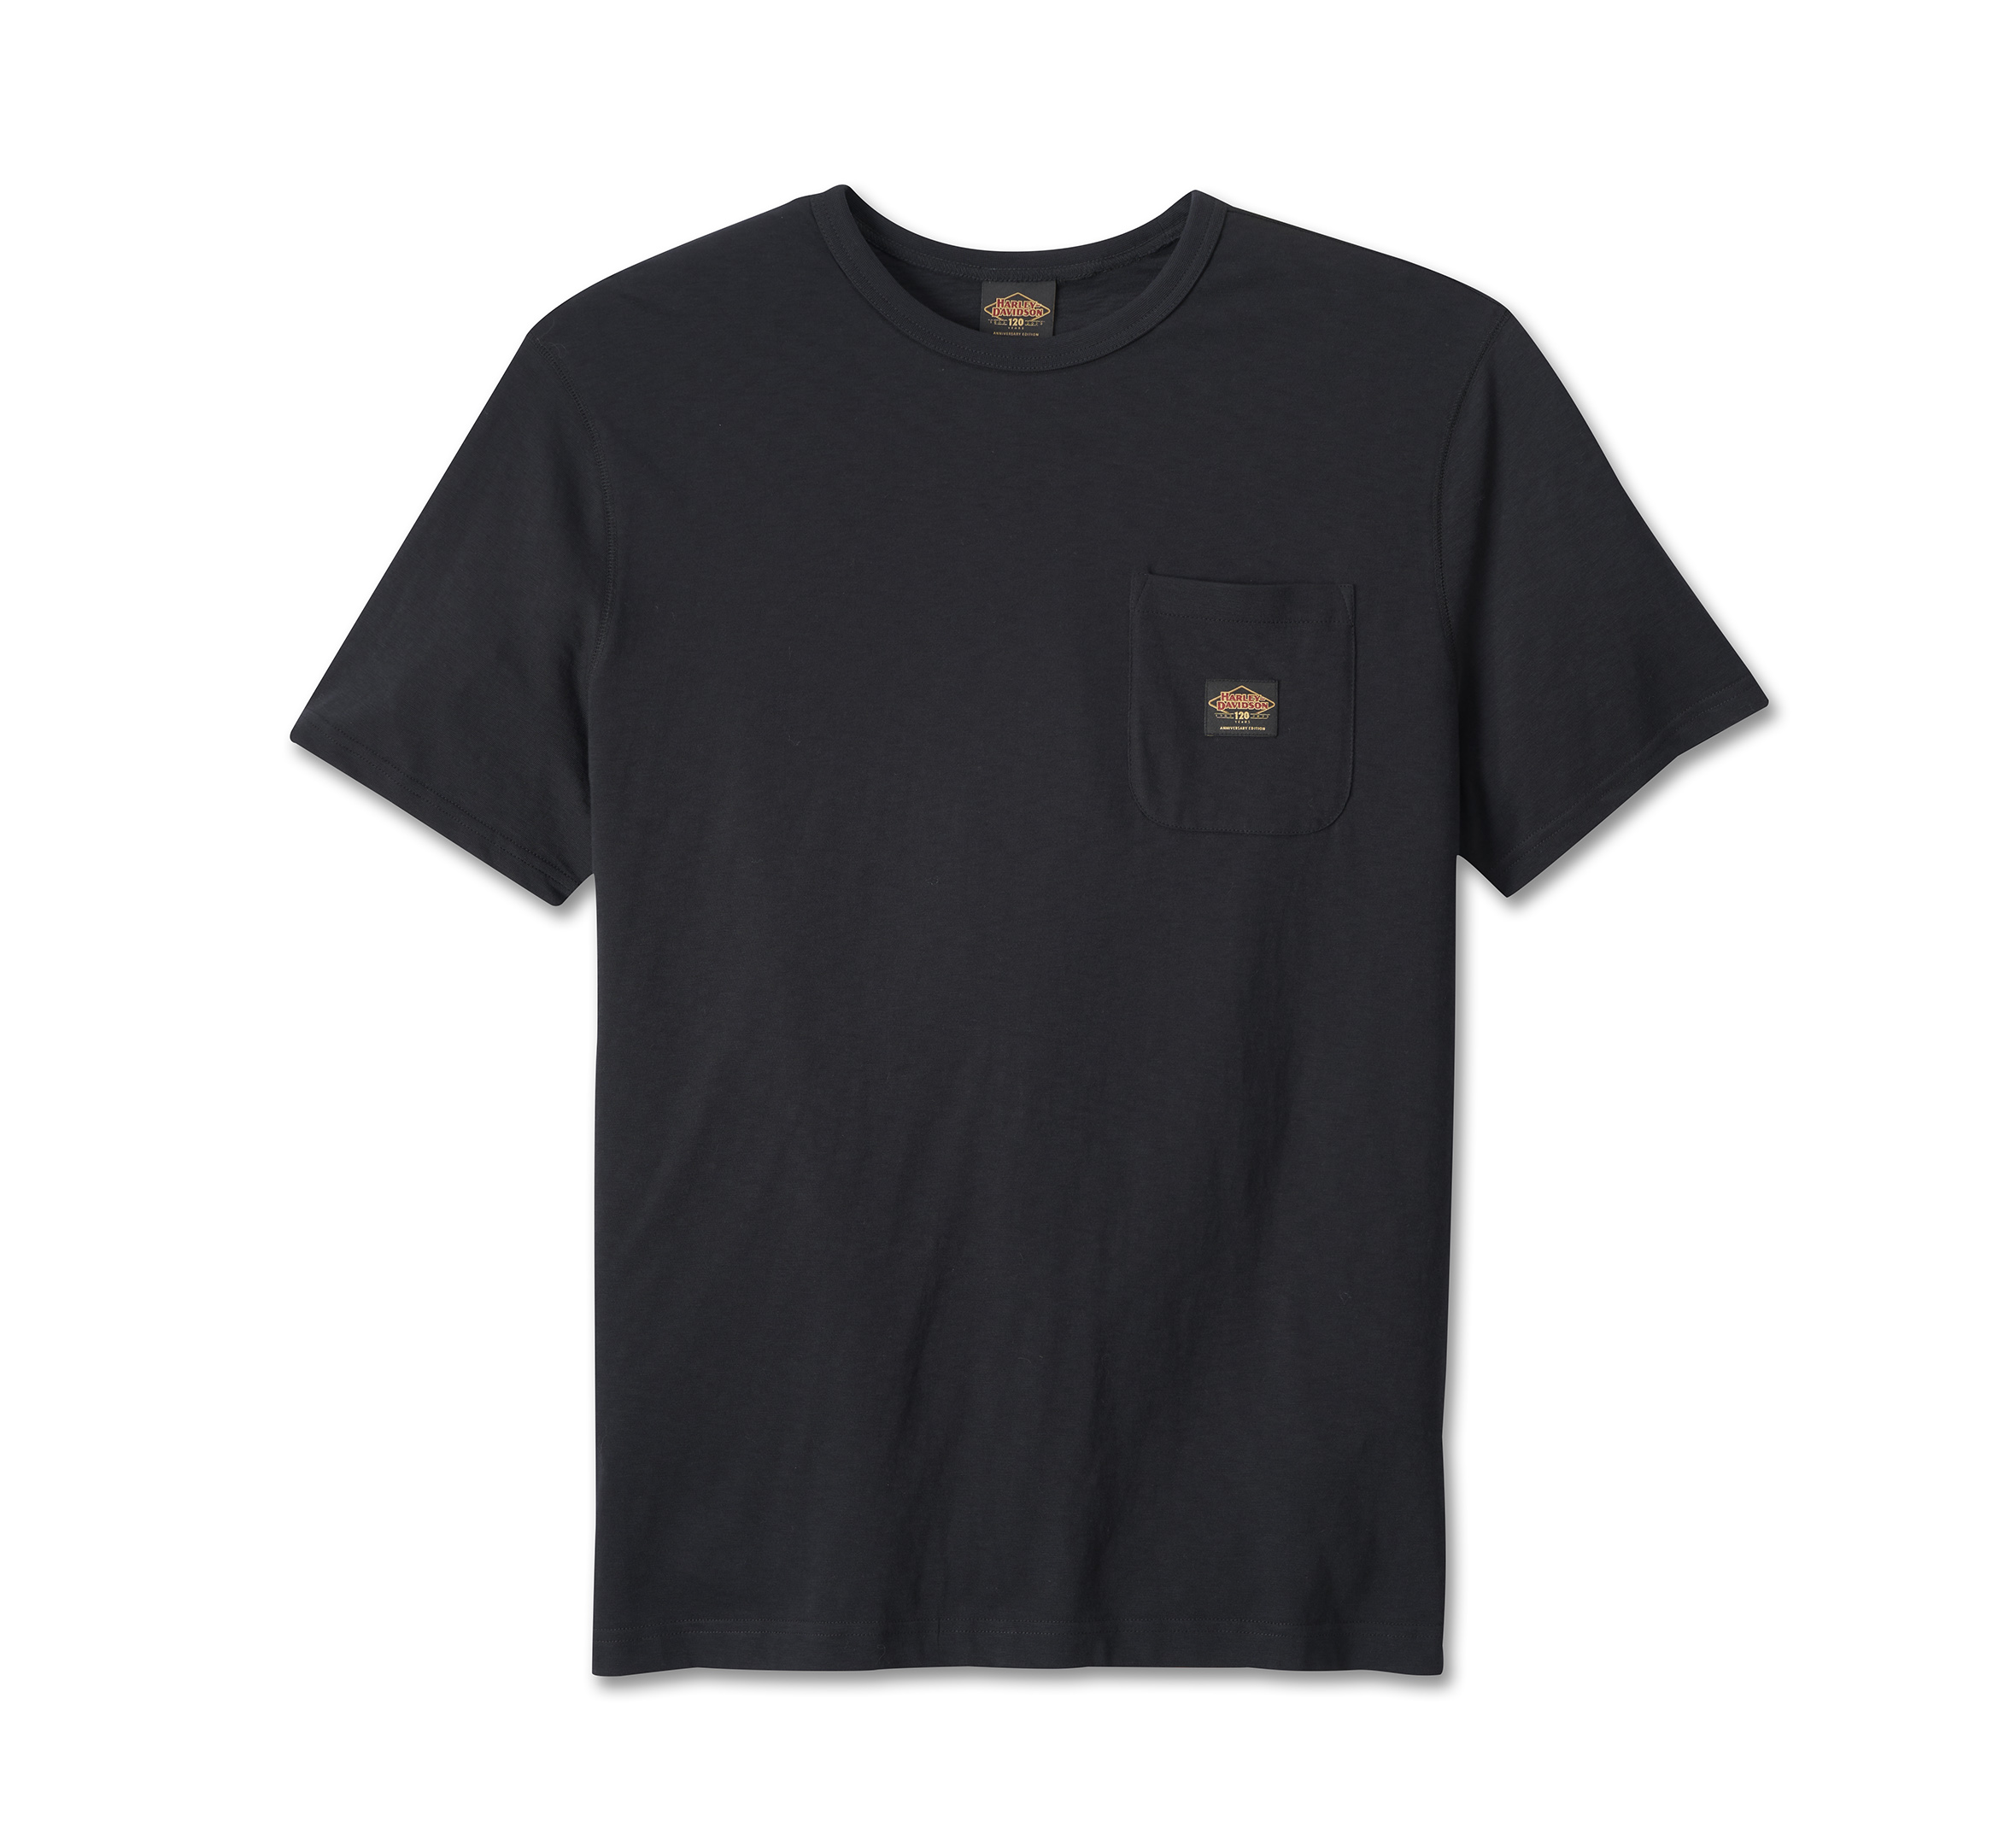 Monogrammed BC Pocket Tee Shirt - 2020 – Sew Fancy Designs